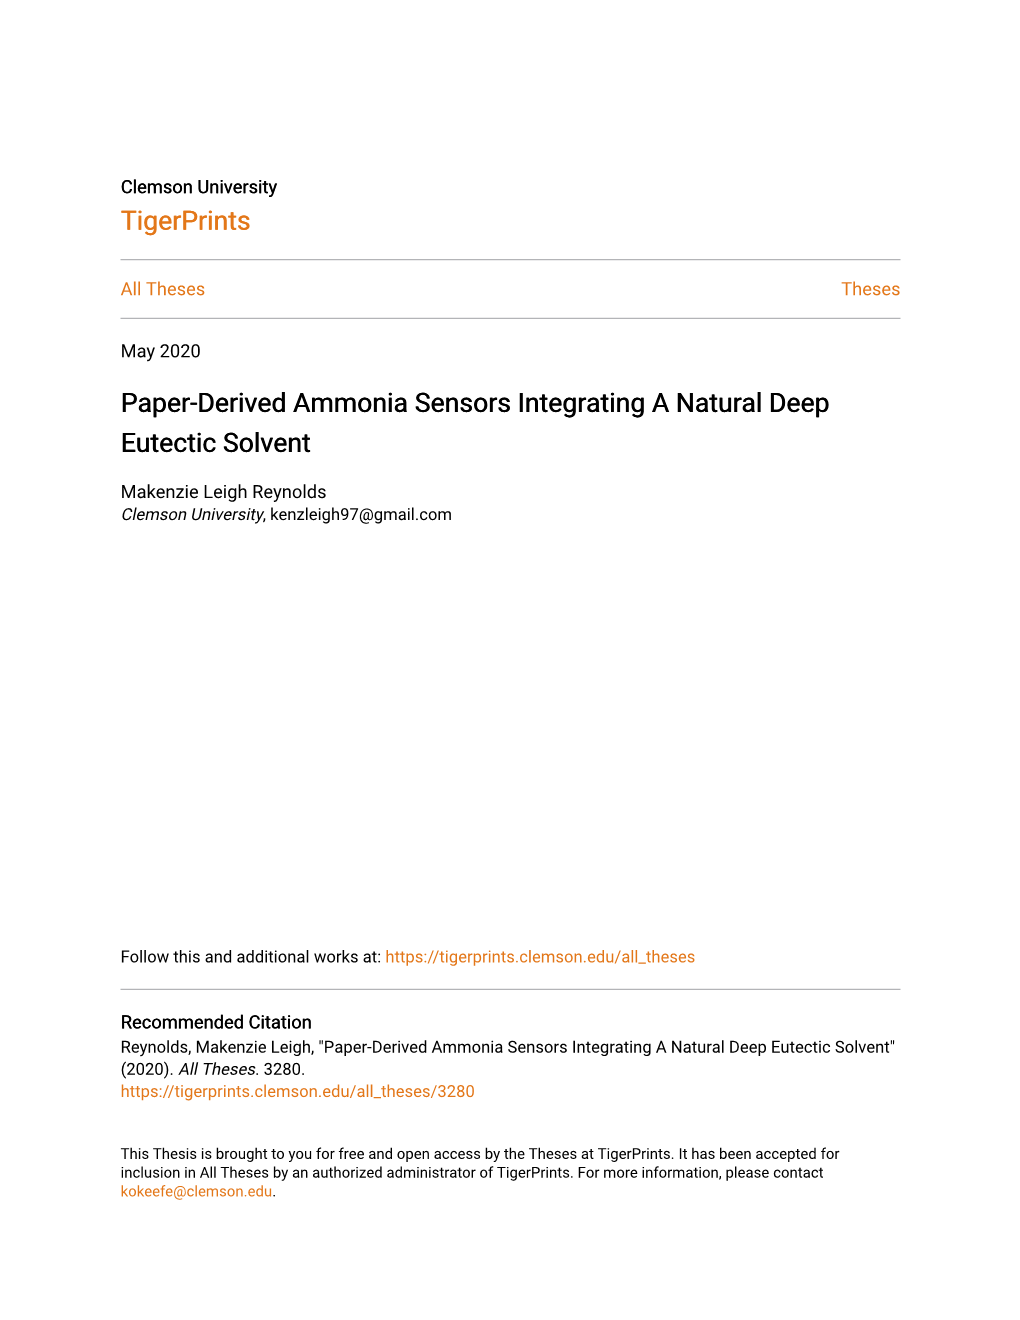 Paper-Derived Ammonia Sensors Integrating a Natural Deep Eutectic Solvent